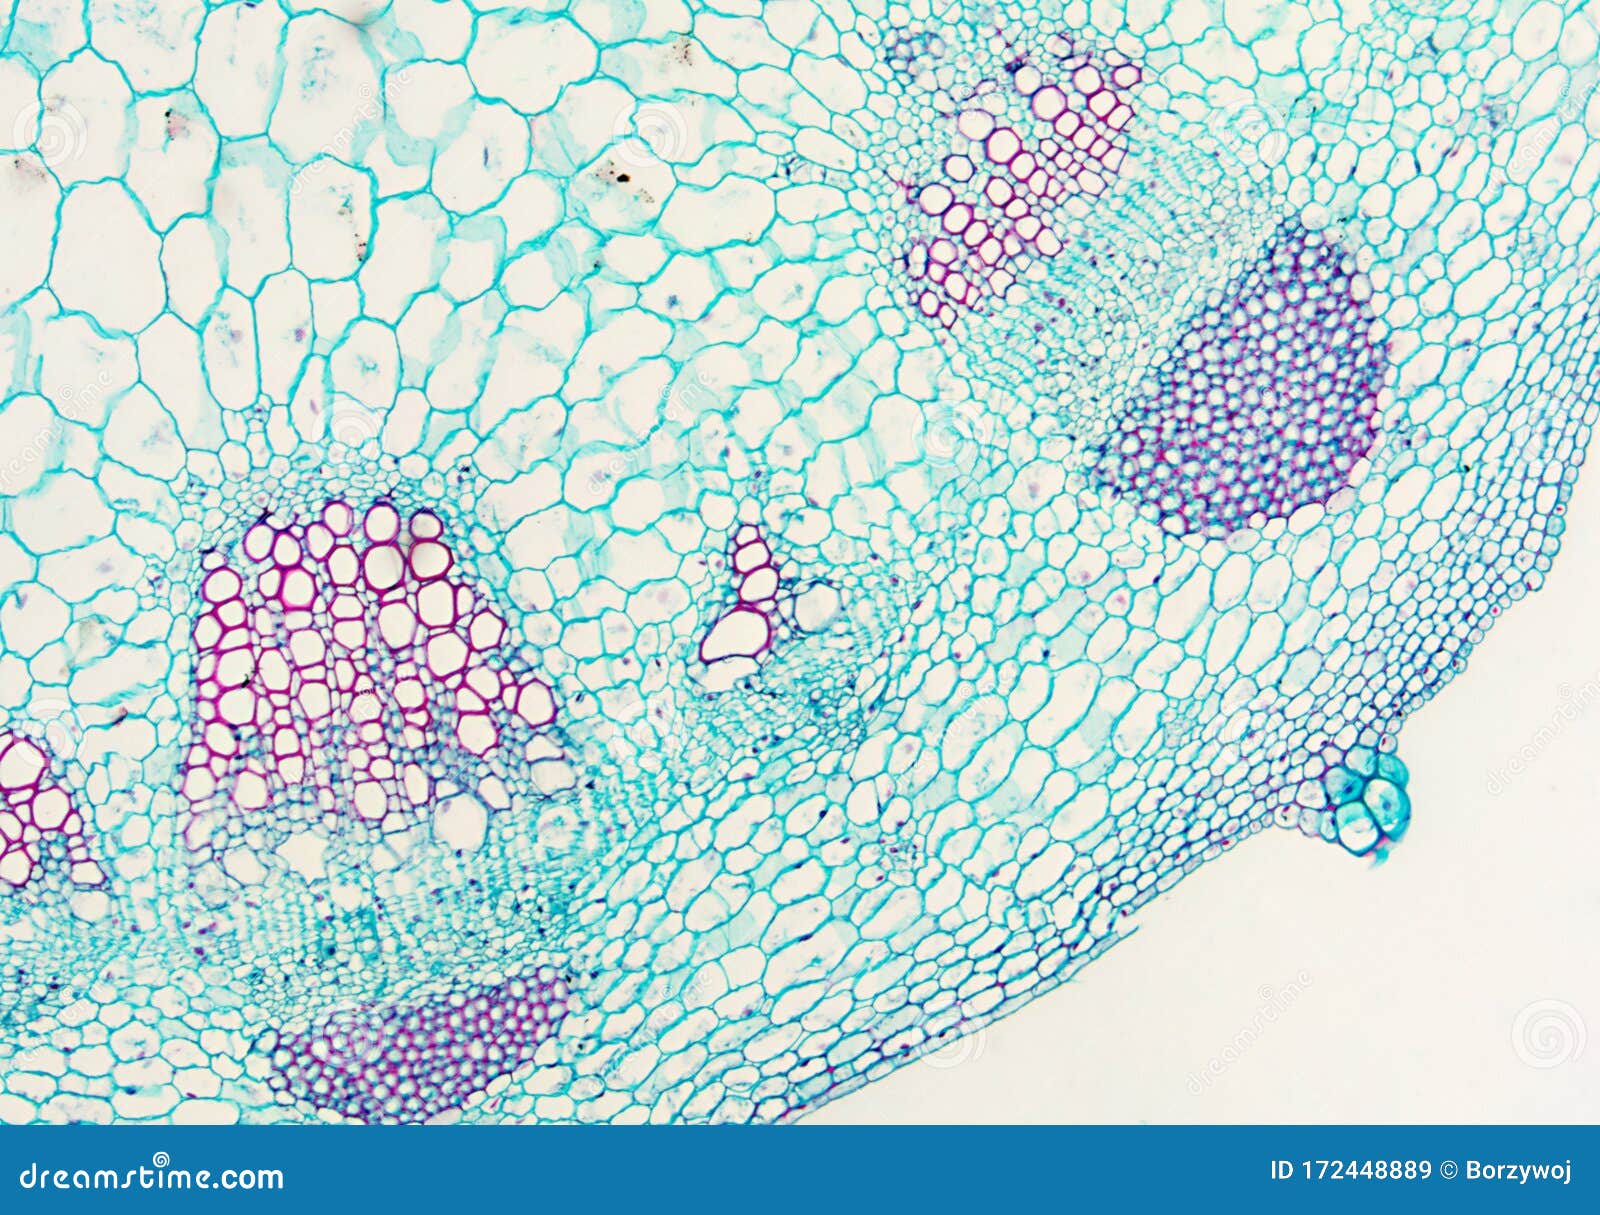 dicotyledon stem - microscopic view